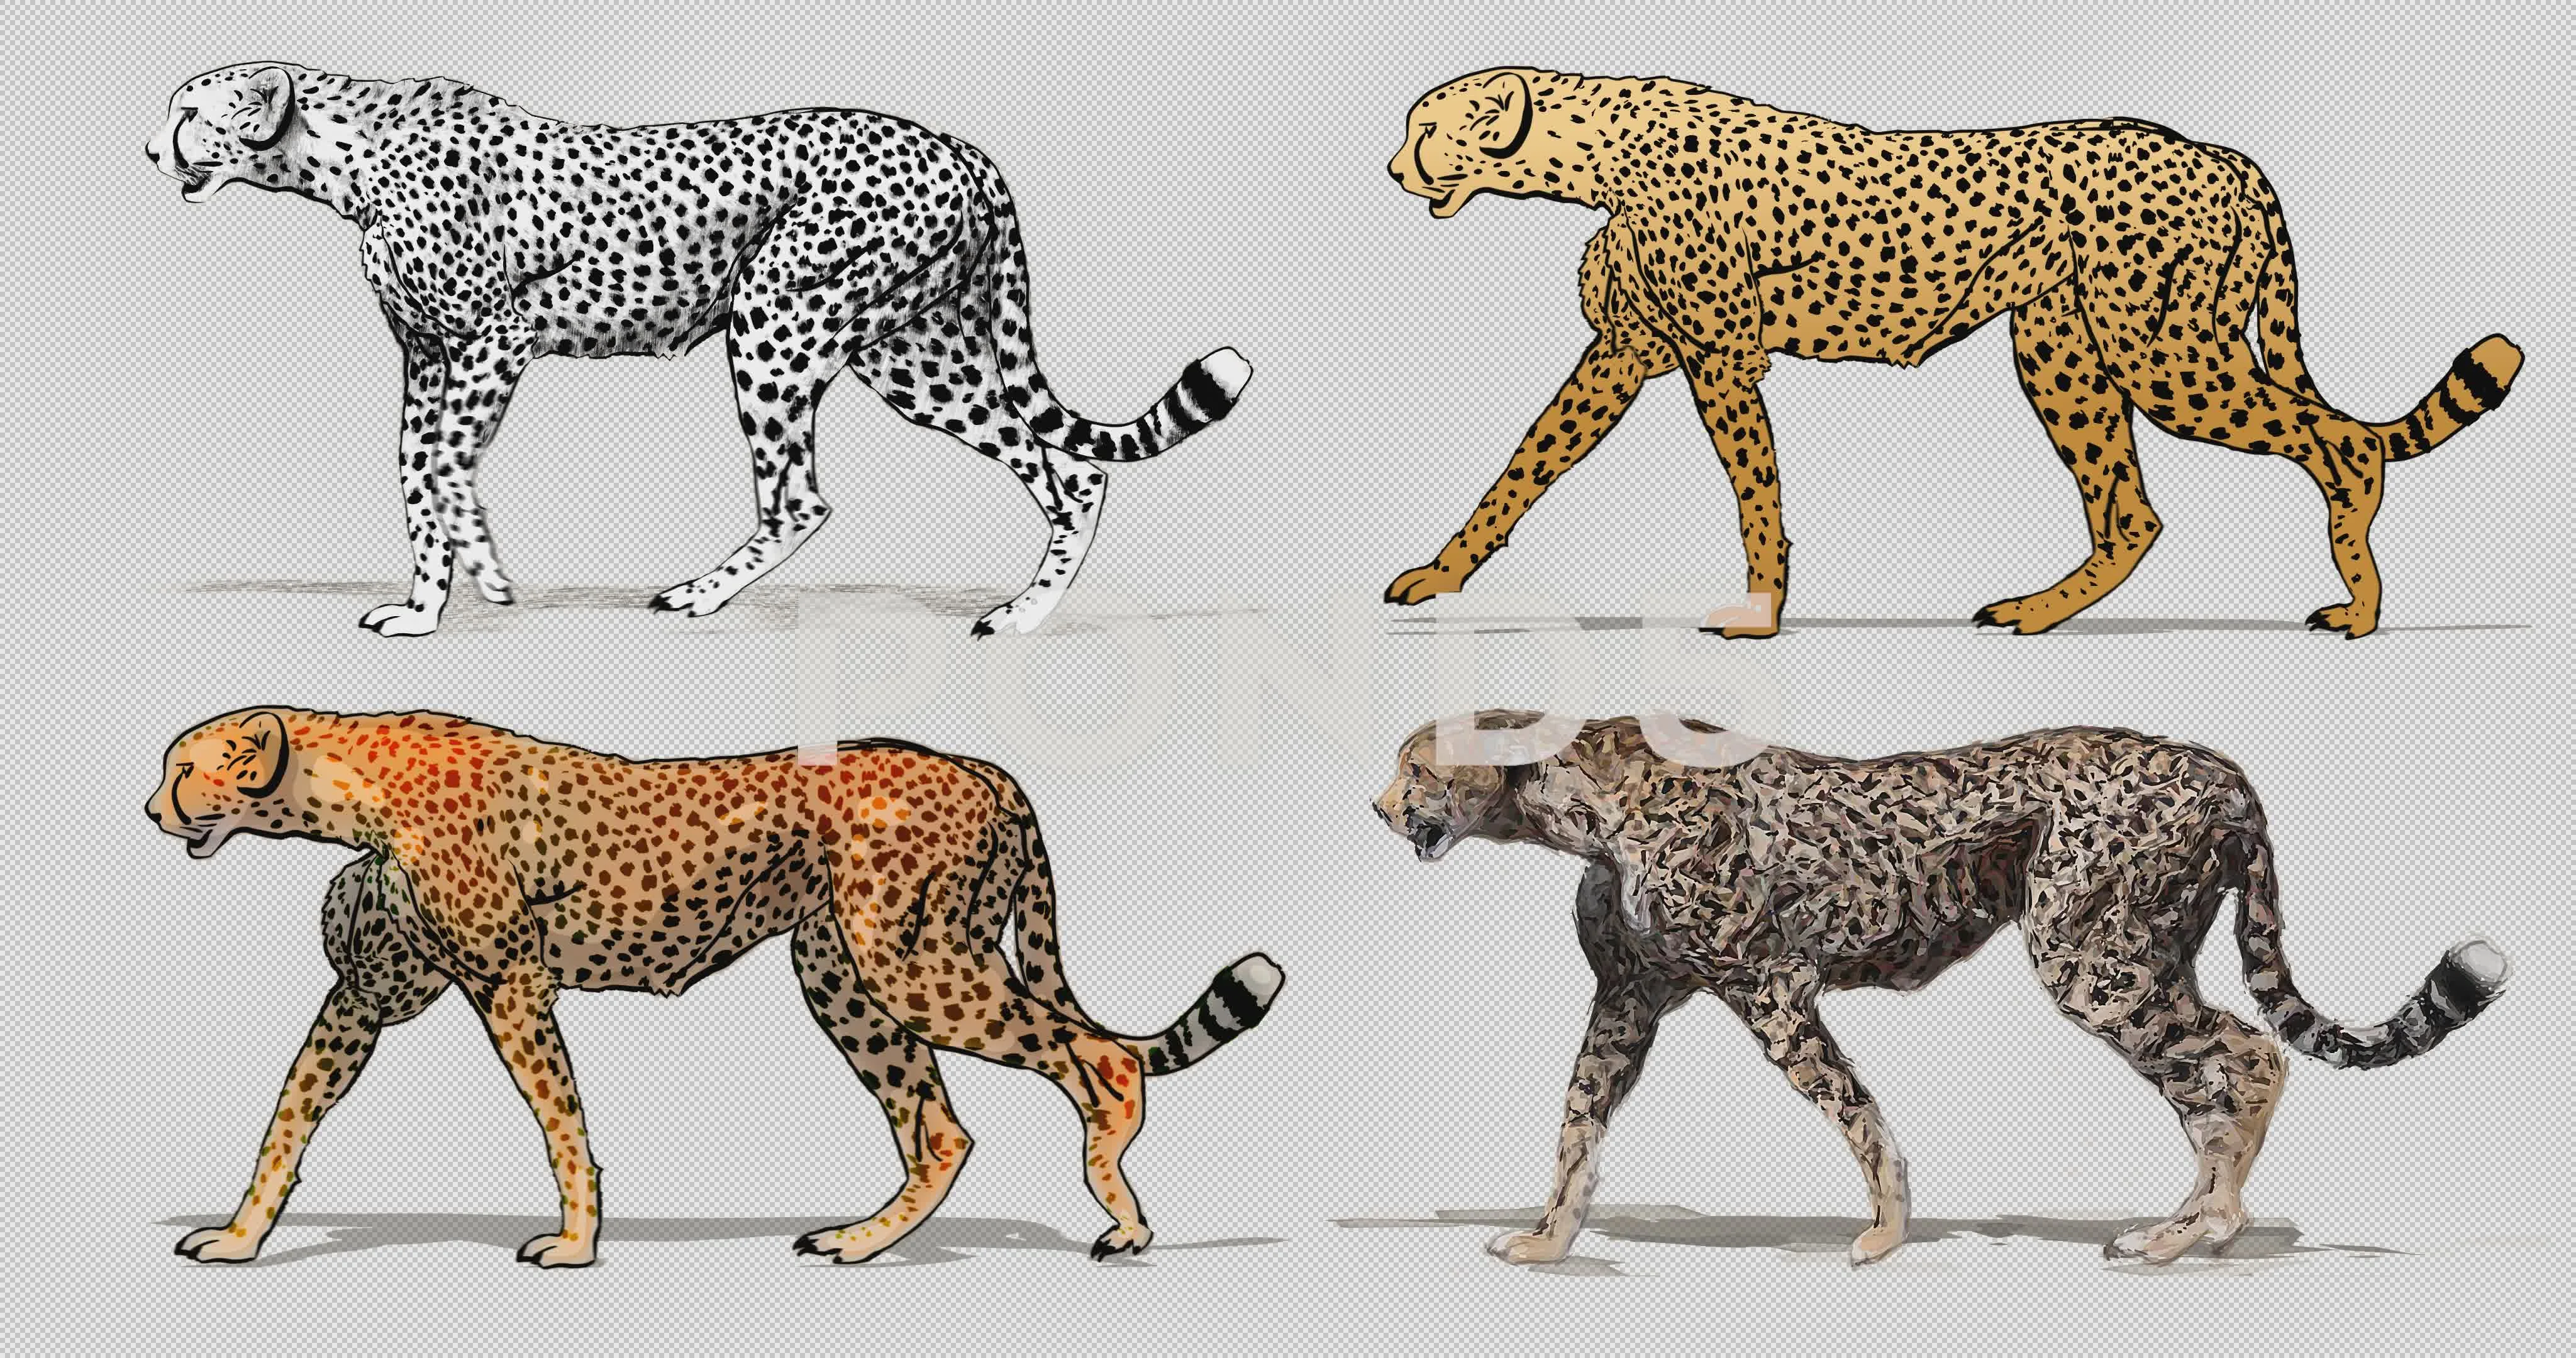 cartoon cheetah running